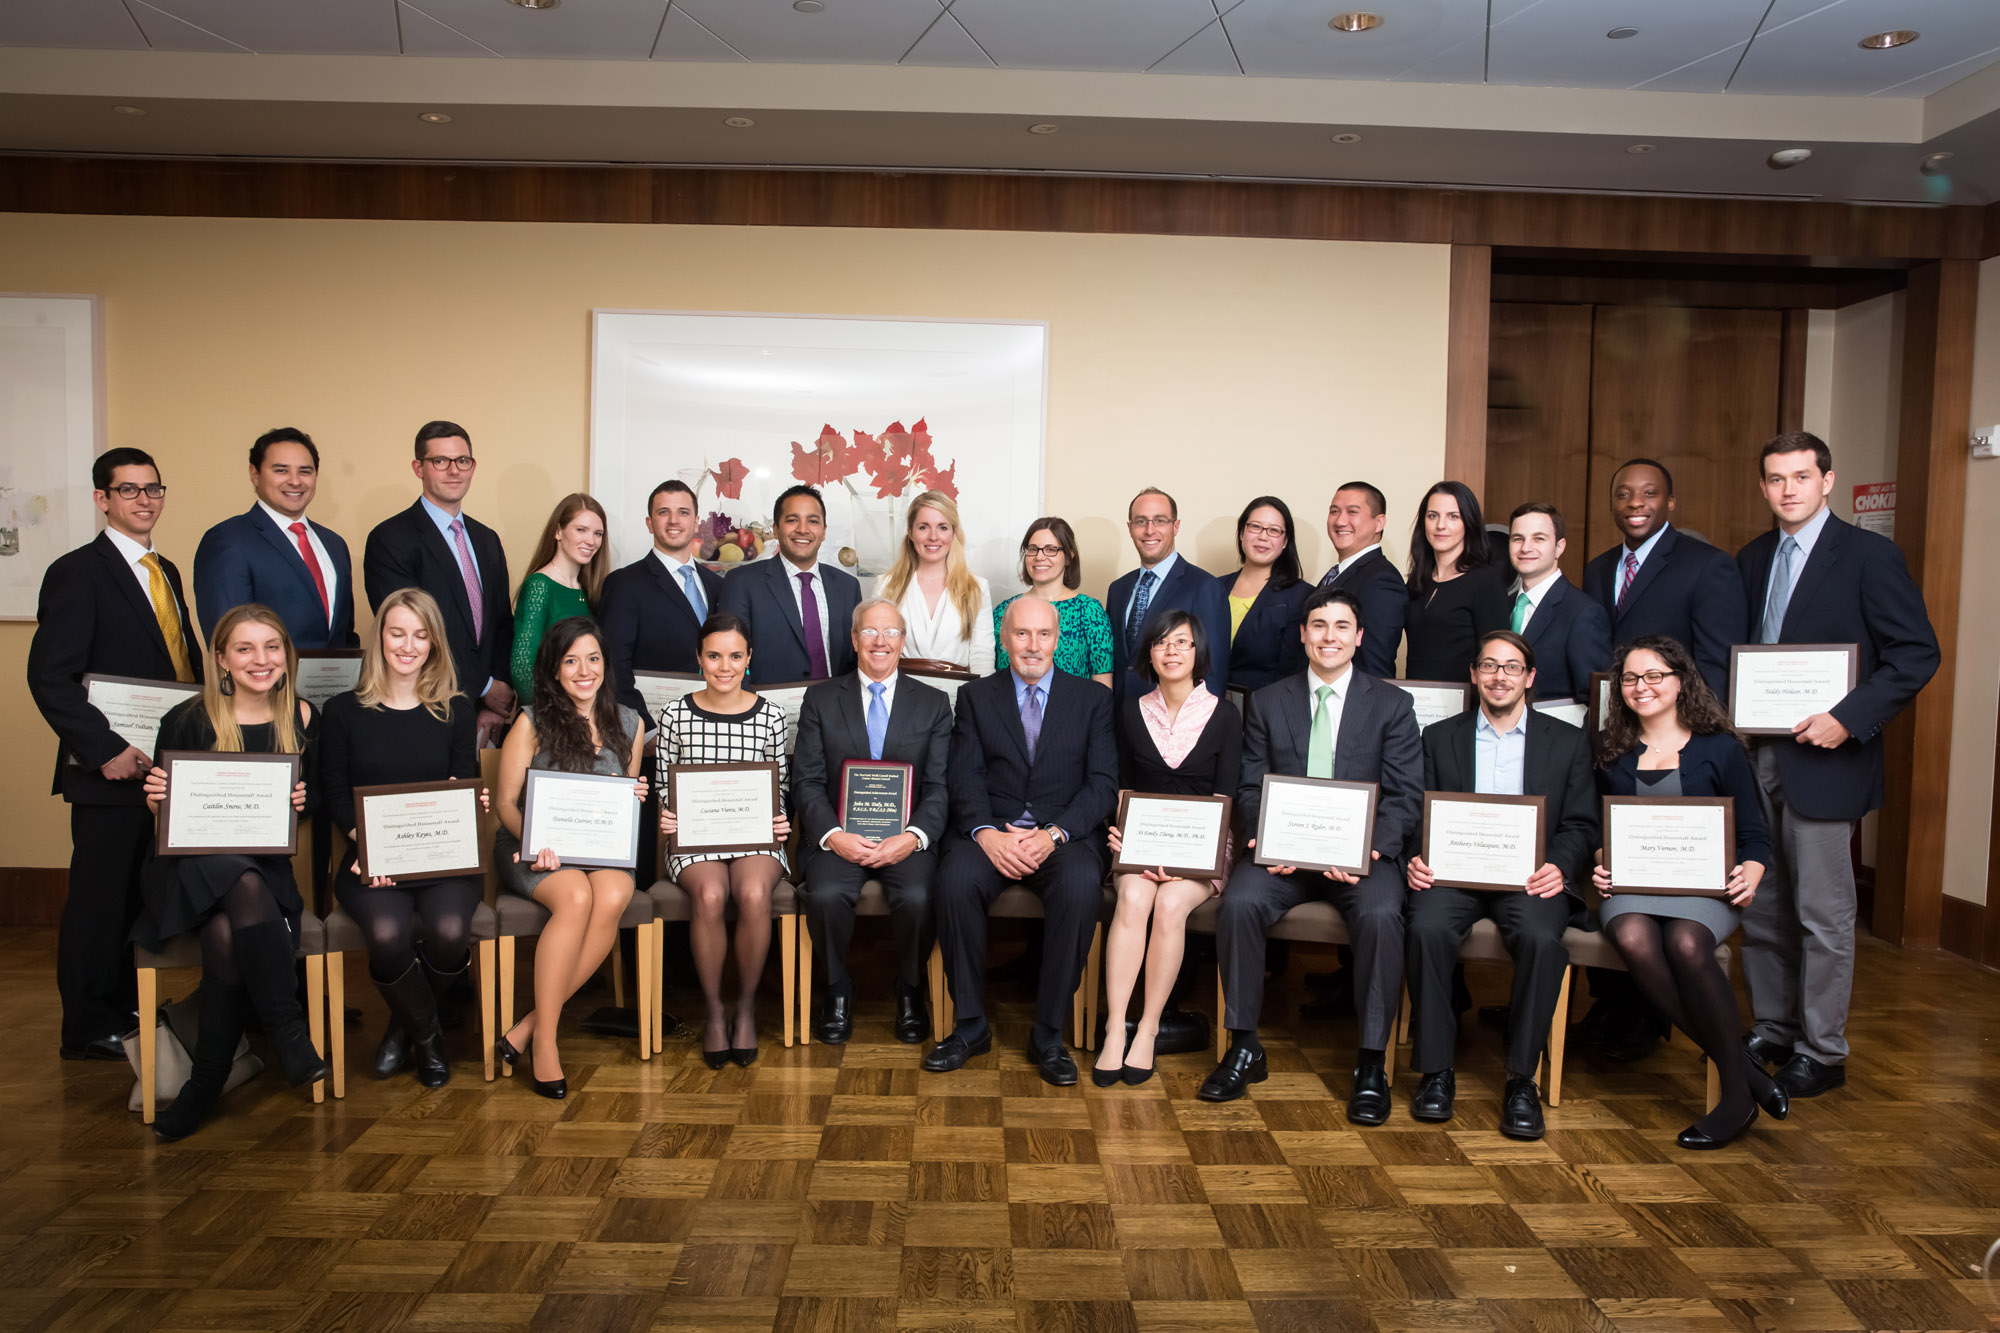 2014 Distinguished Housestaff Award recipients